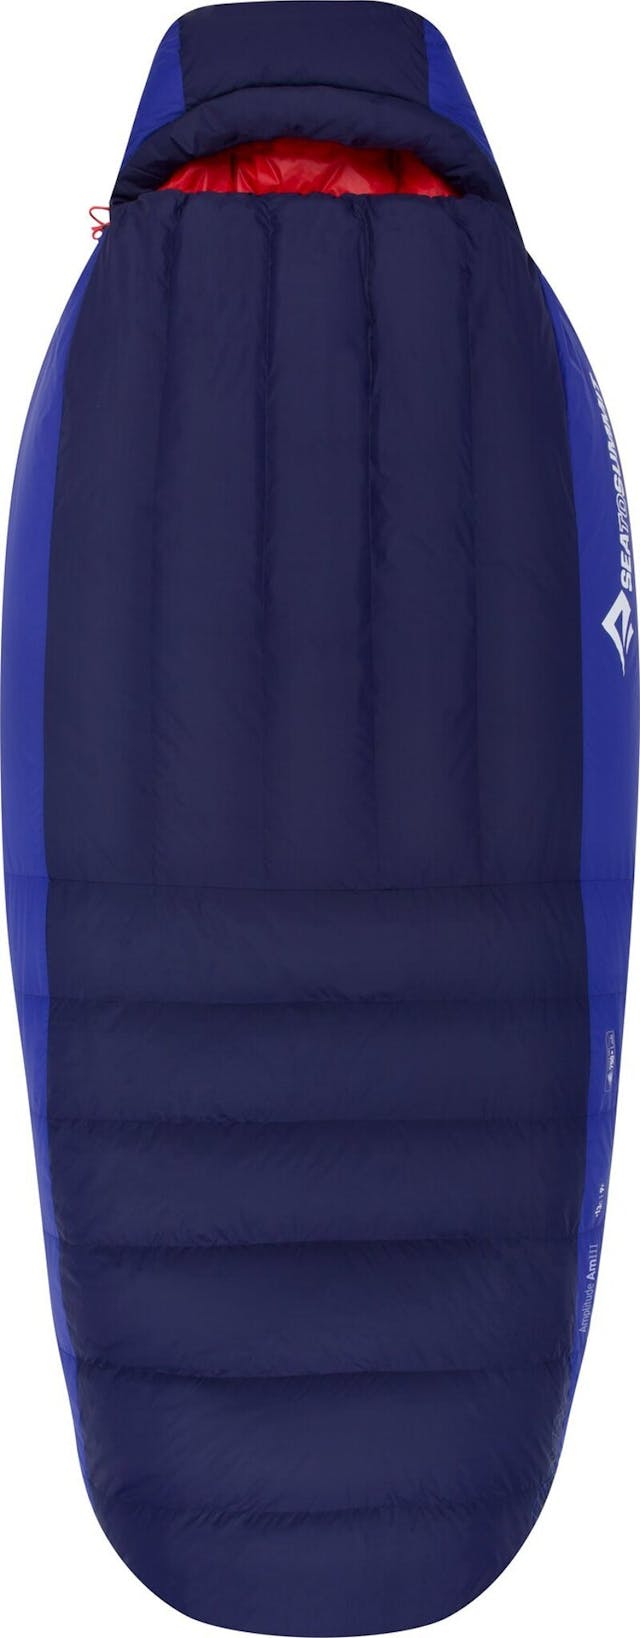 Product image for Amplitude Down Sleeping Bag Long 5°F/-15°C - Unisex